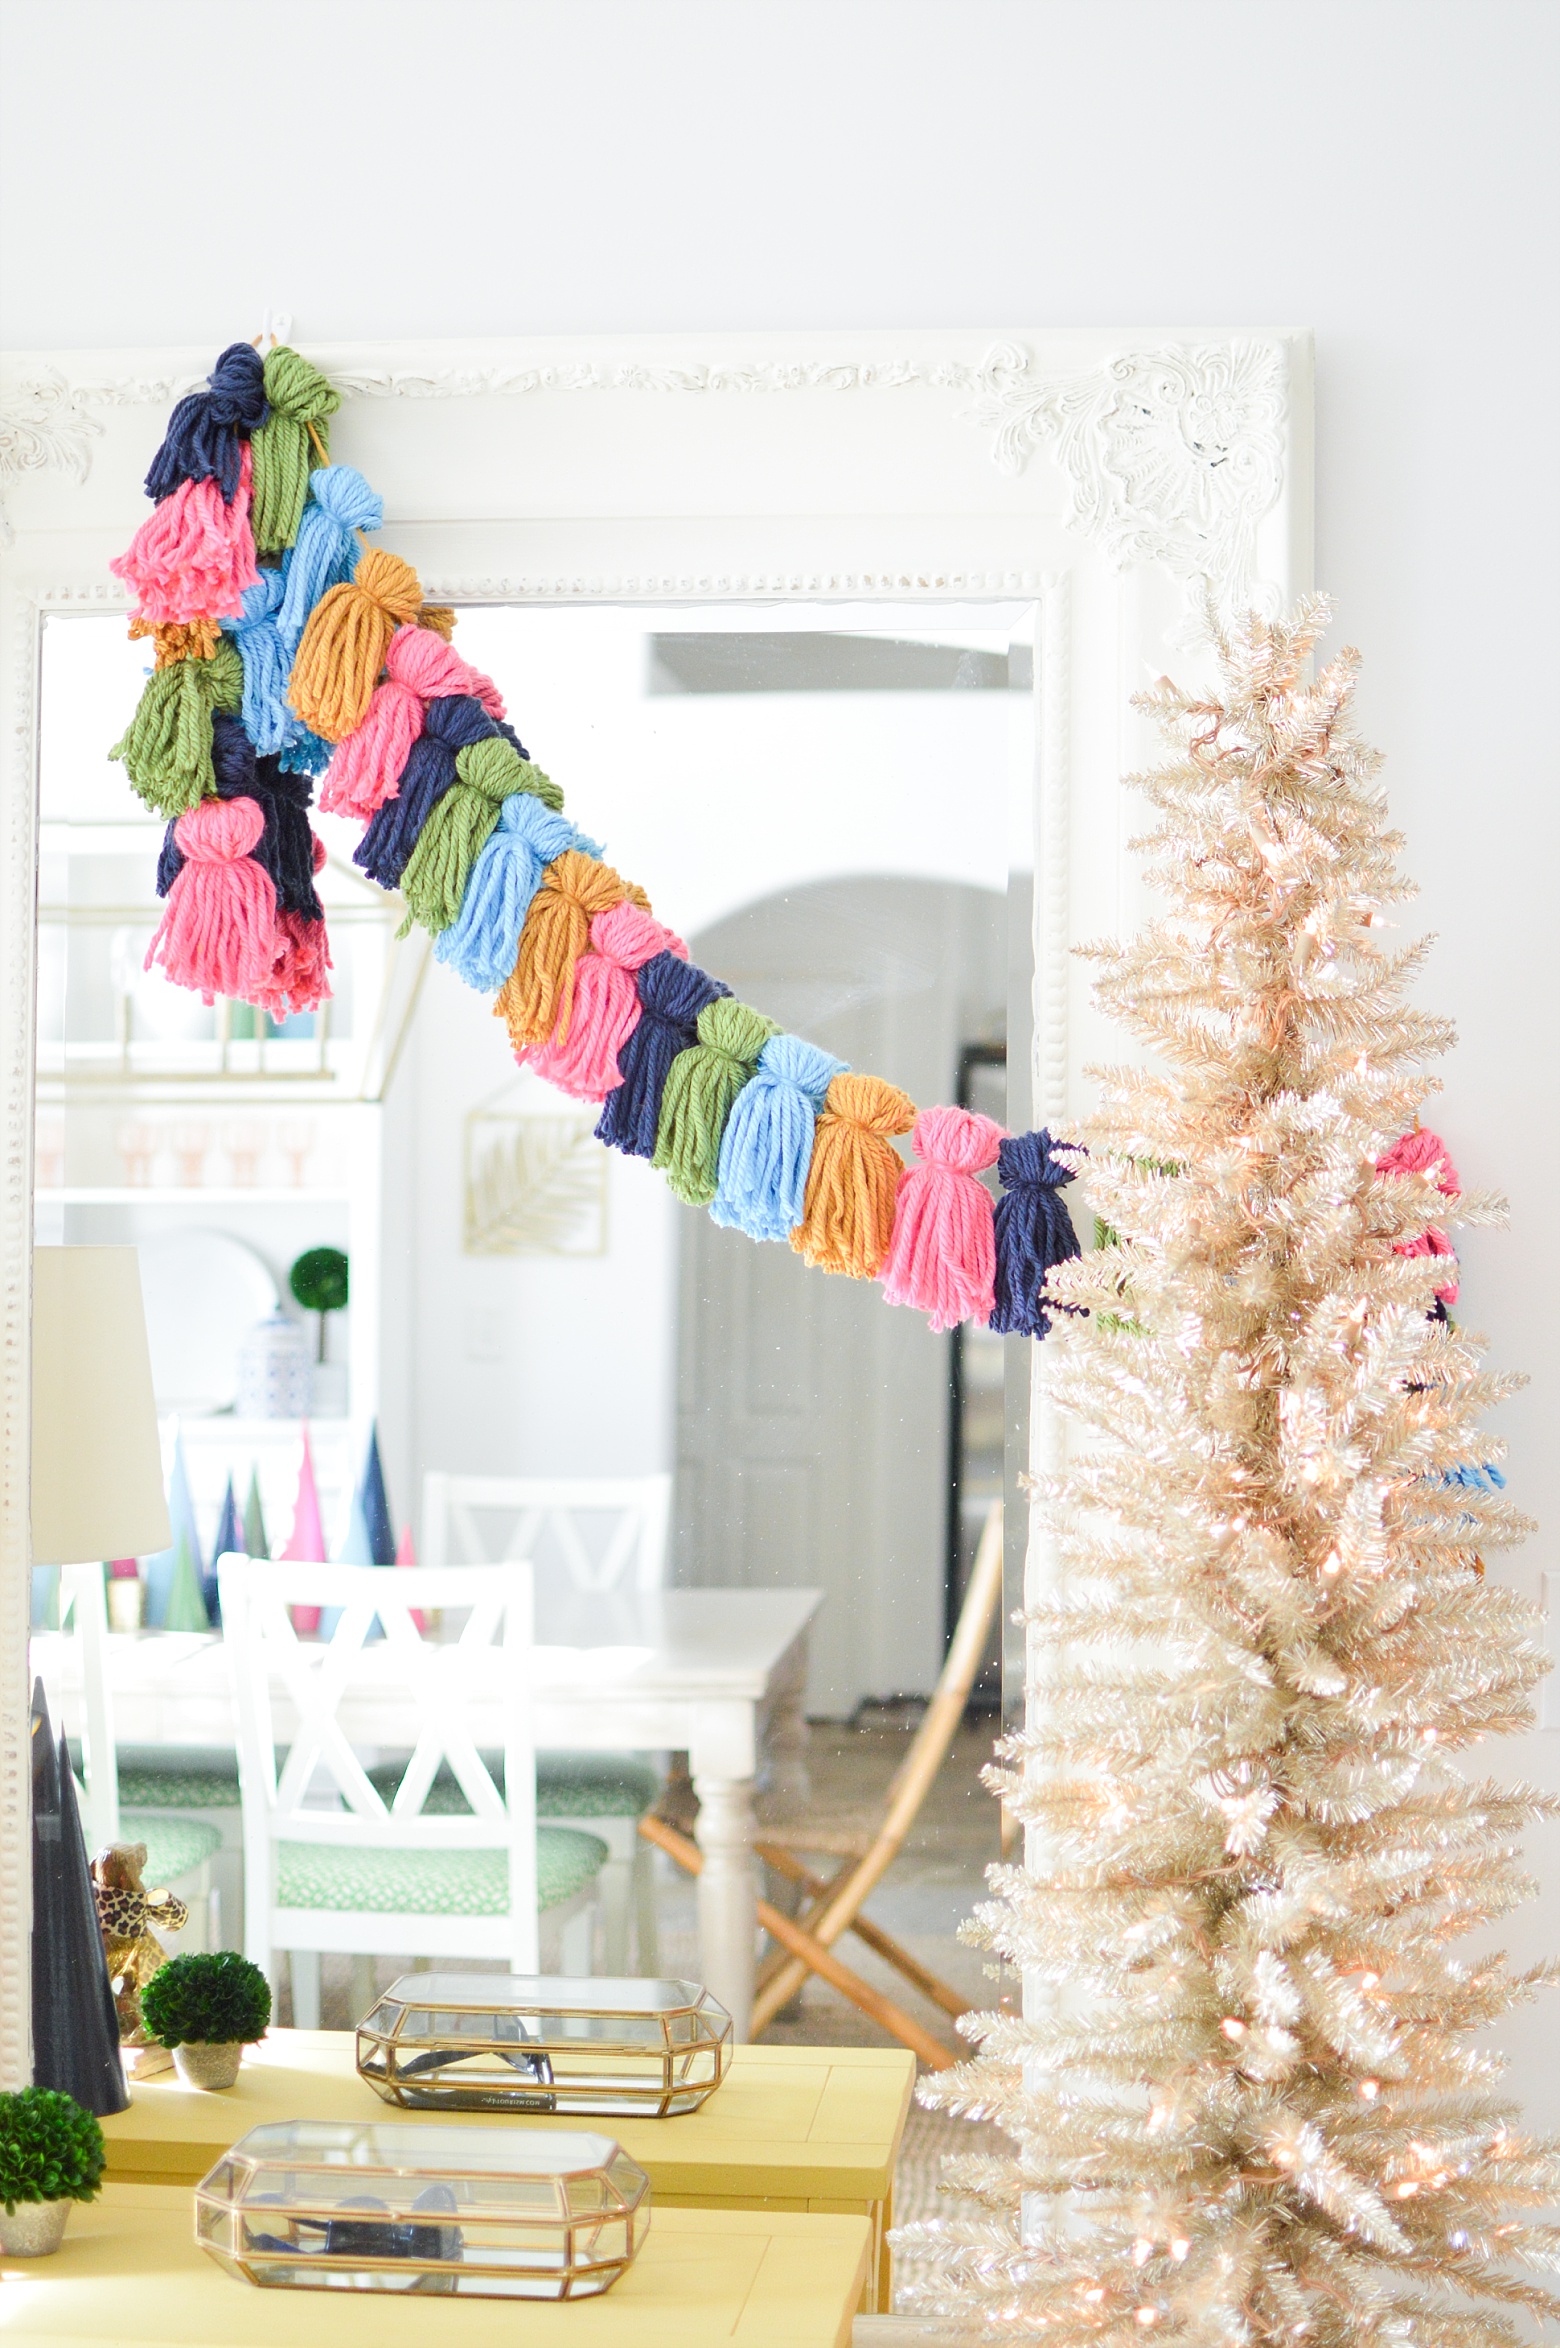 Modern Colorful Christmas, Bright holiday decorations, tassel garland, yarn crafts, gold Christmas tree, entry way, design by Megan Martin Creative 